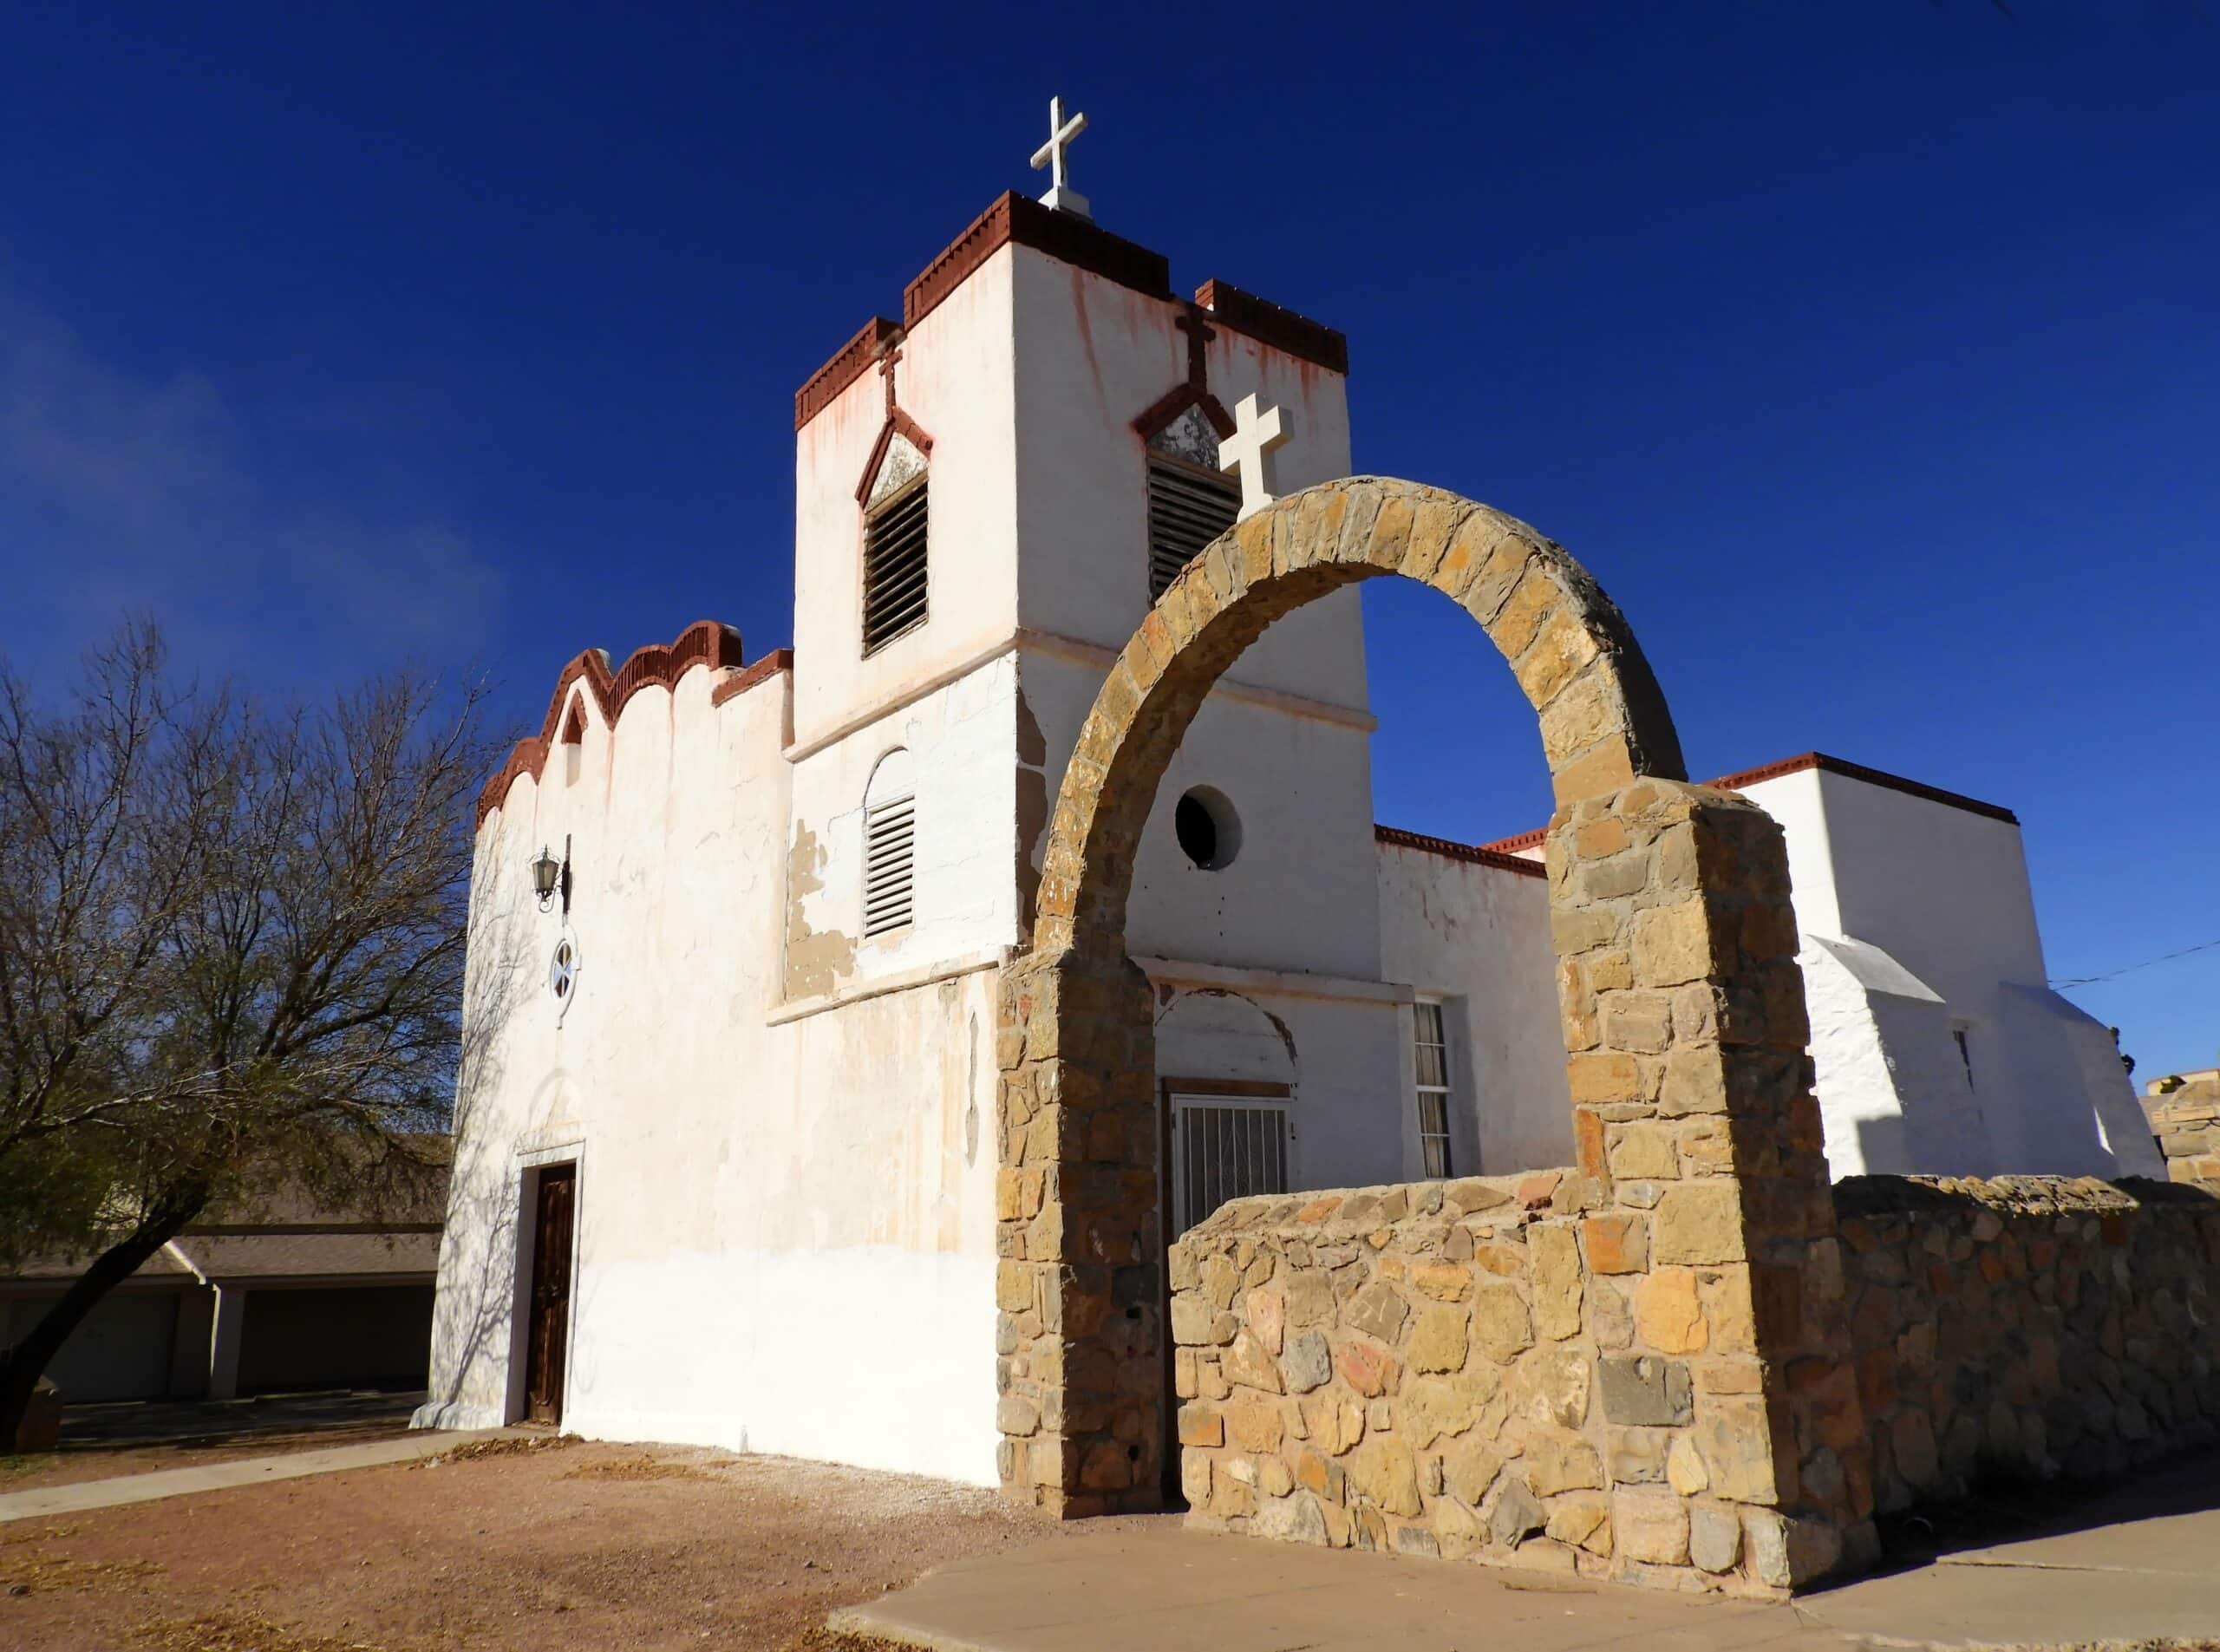 The historic adobe Catholic church of Nuestra Senora de la Candelaria in Dona Ana, north of Las Cruces, NM